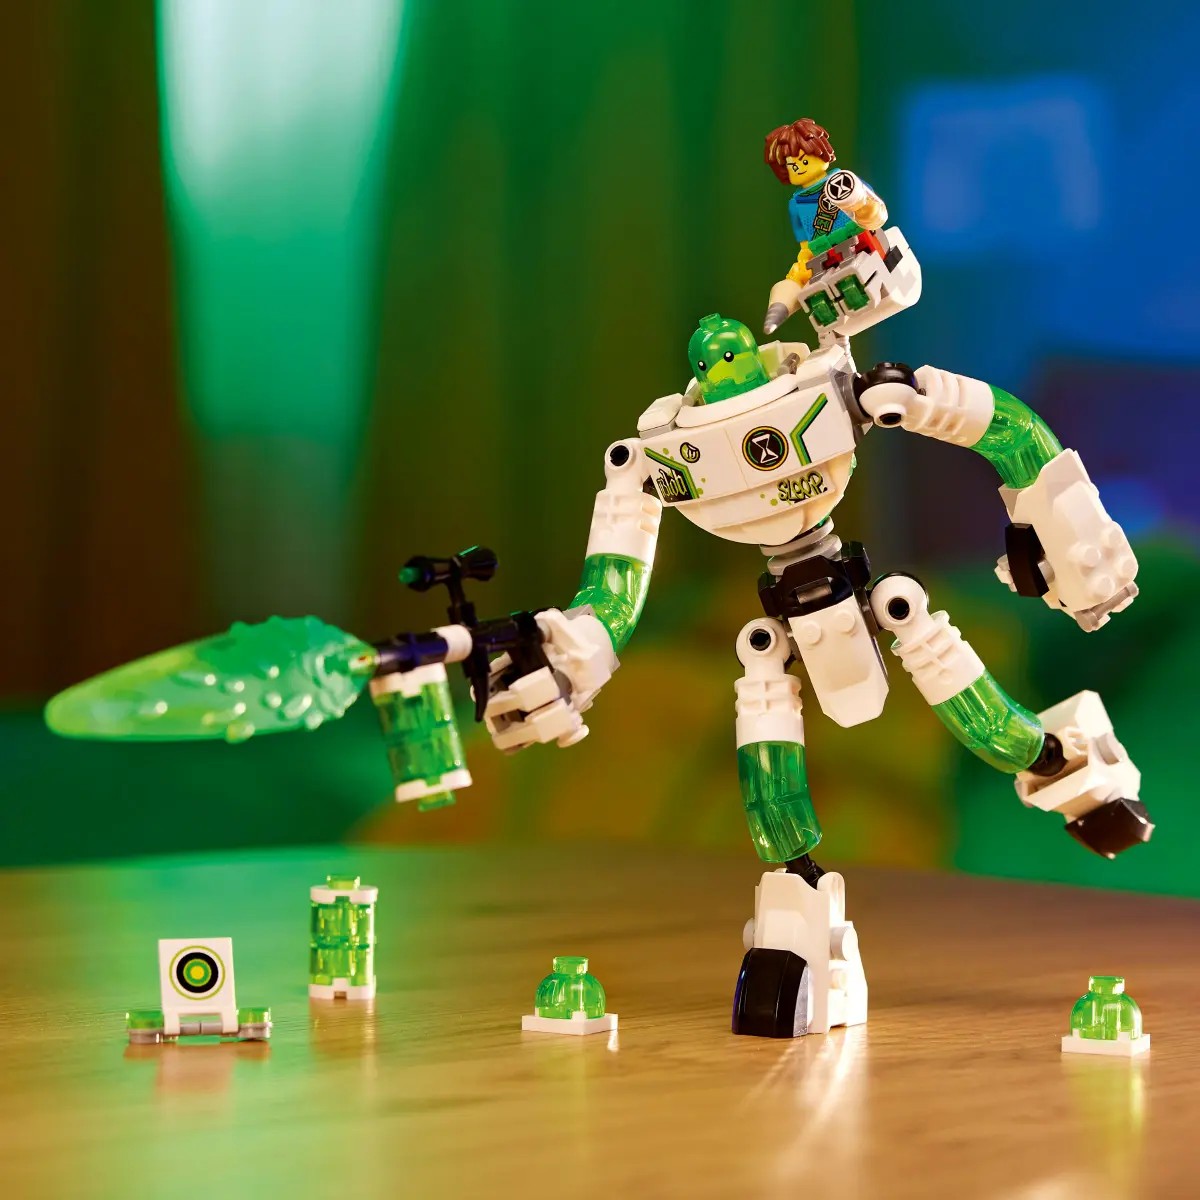 LEGO DREAMZZZ MATEO A ROBOT Z-BLOB /71454/